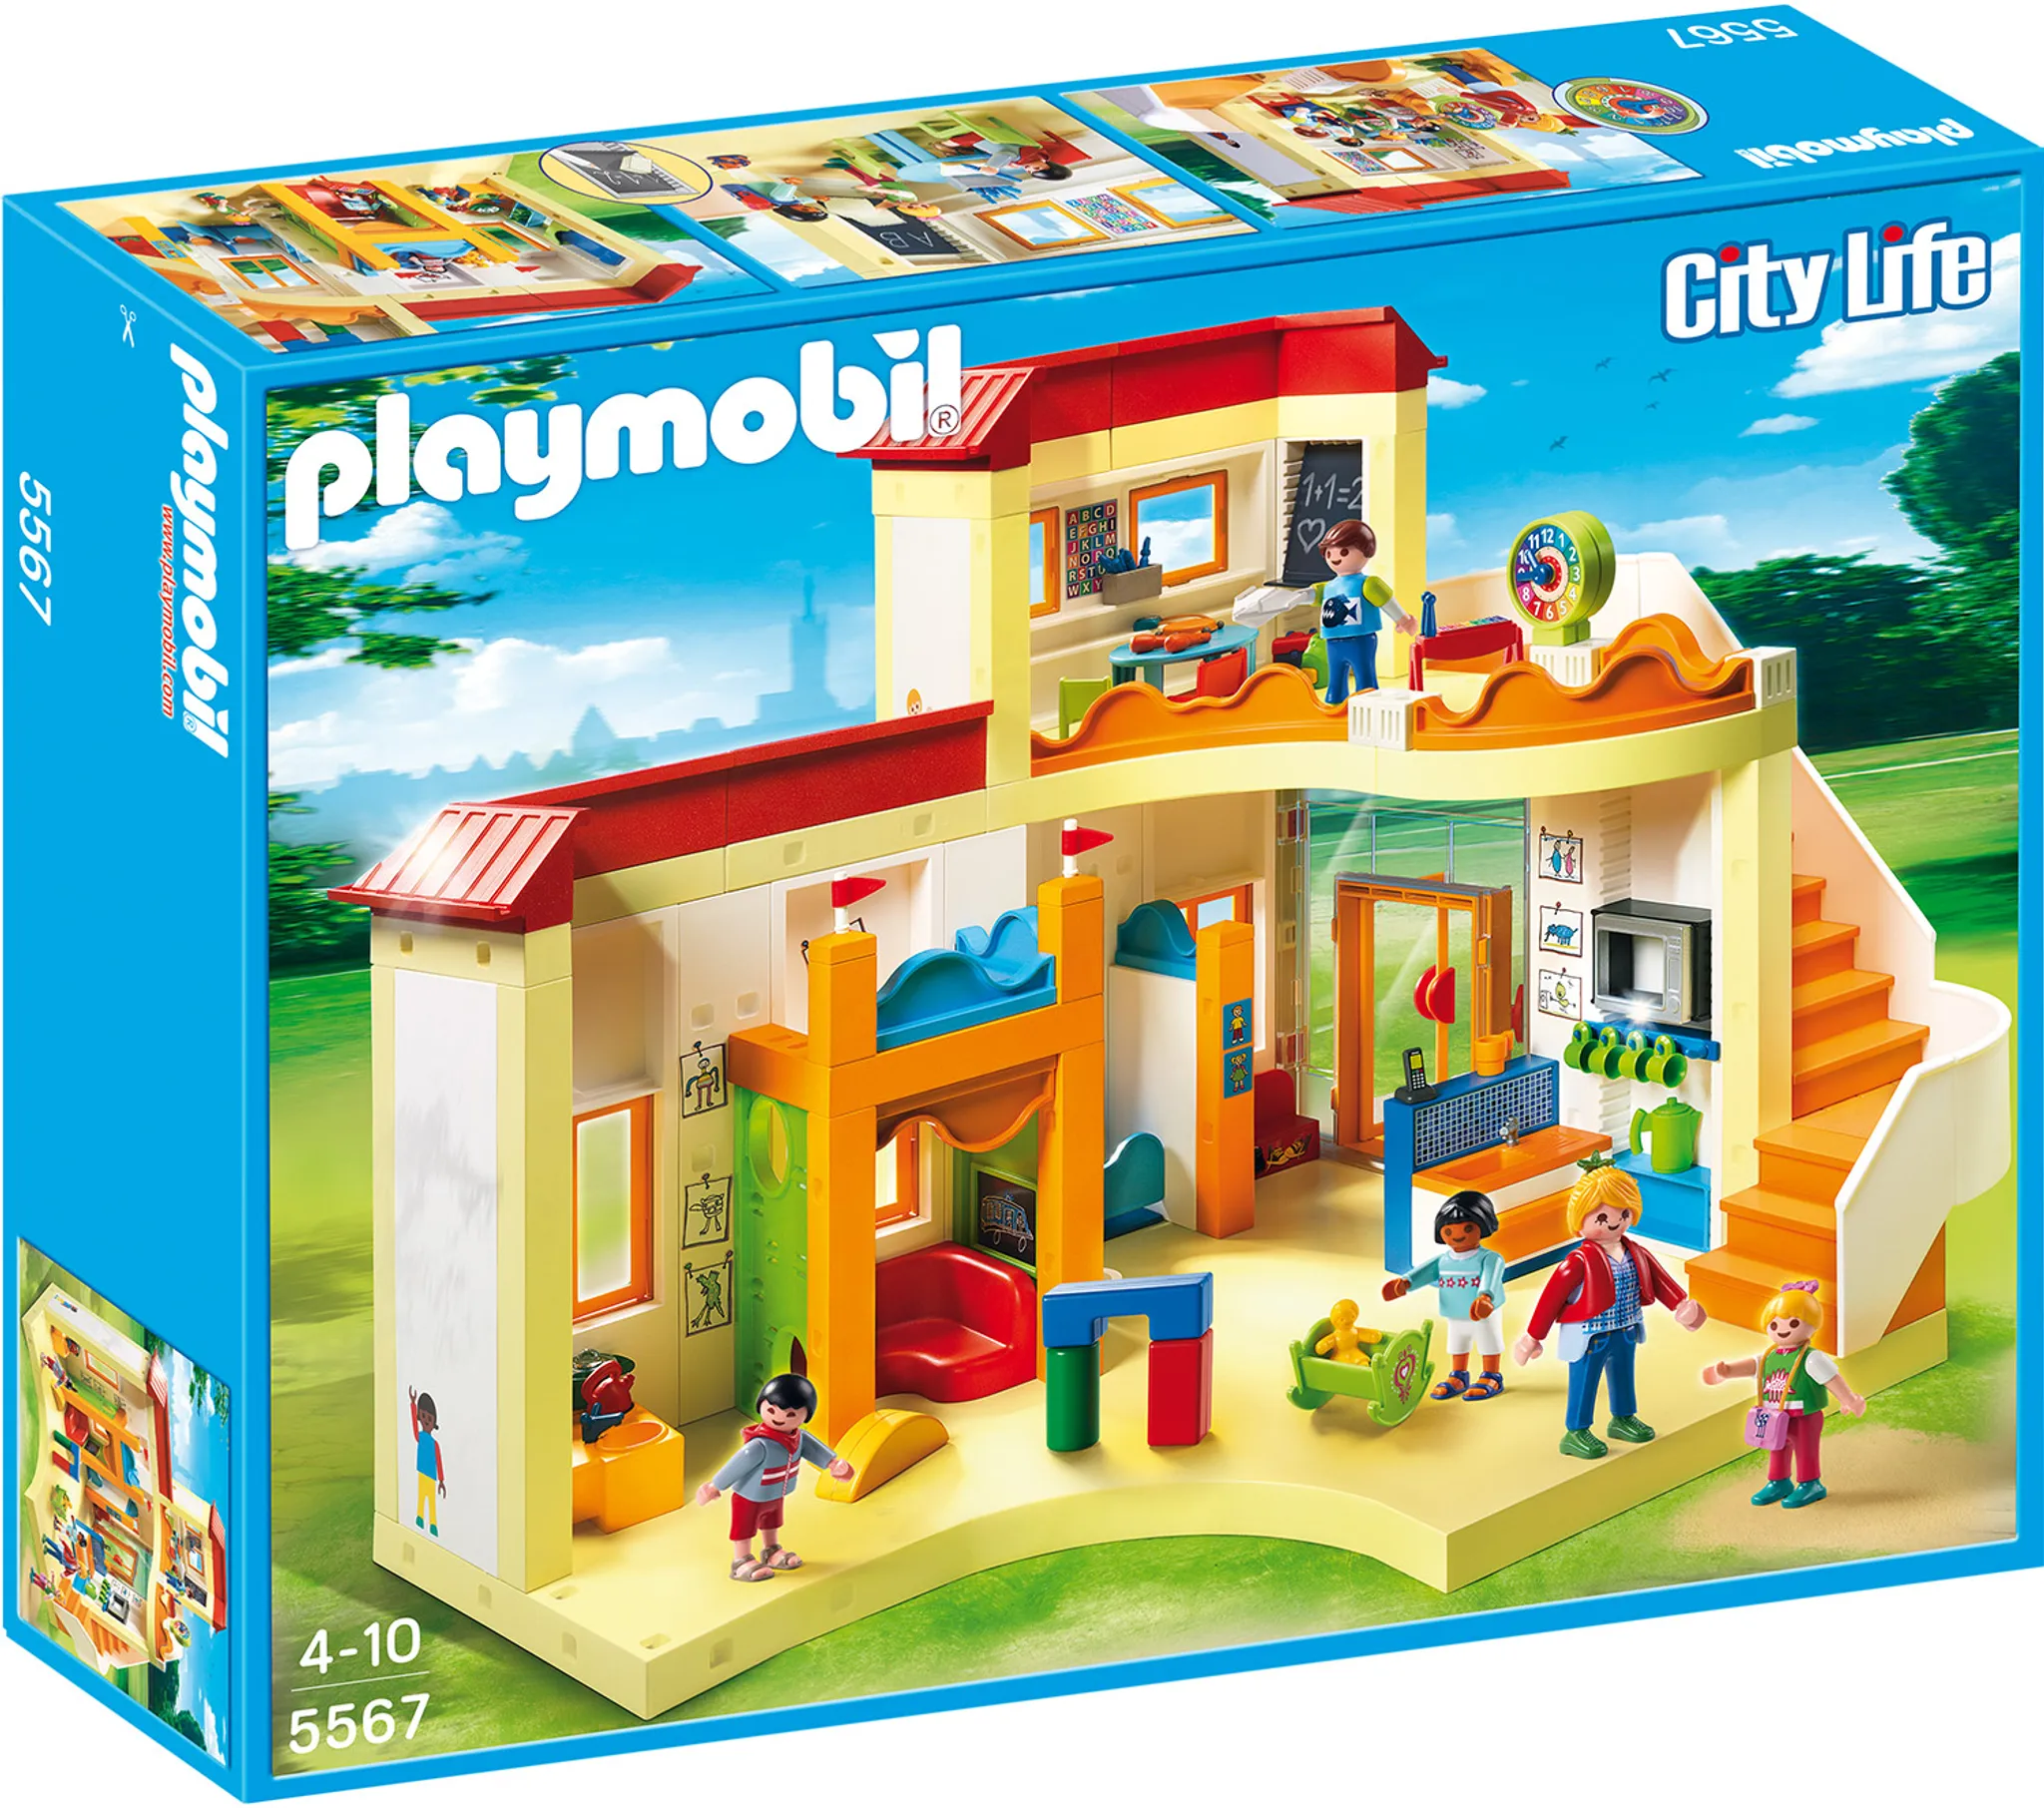 Playmobil Zum Bauen Playmobil, Lego & Co. Kinder Spielzeug Zum Bauen Playmobil, Lego & Co. | Maison moderne playmobil 